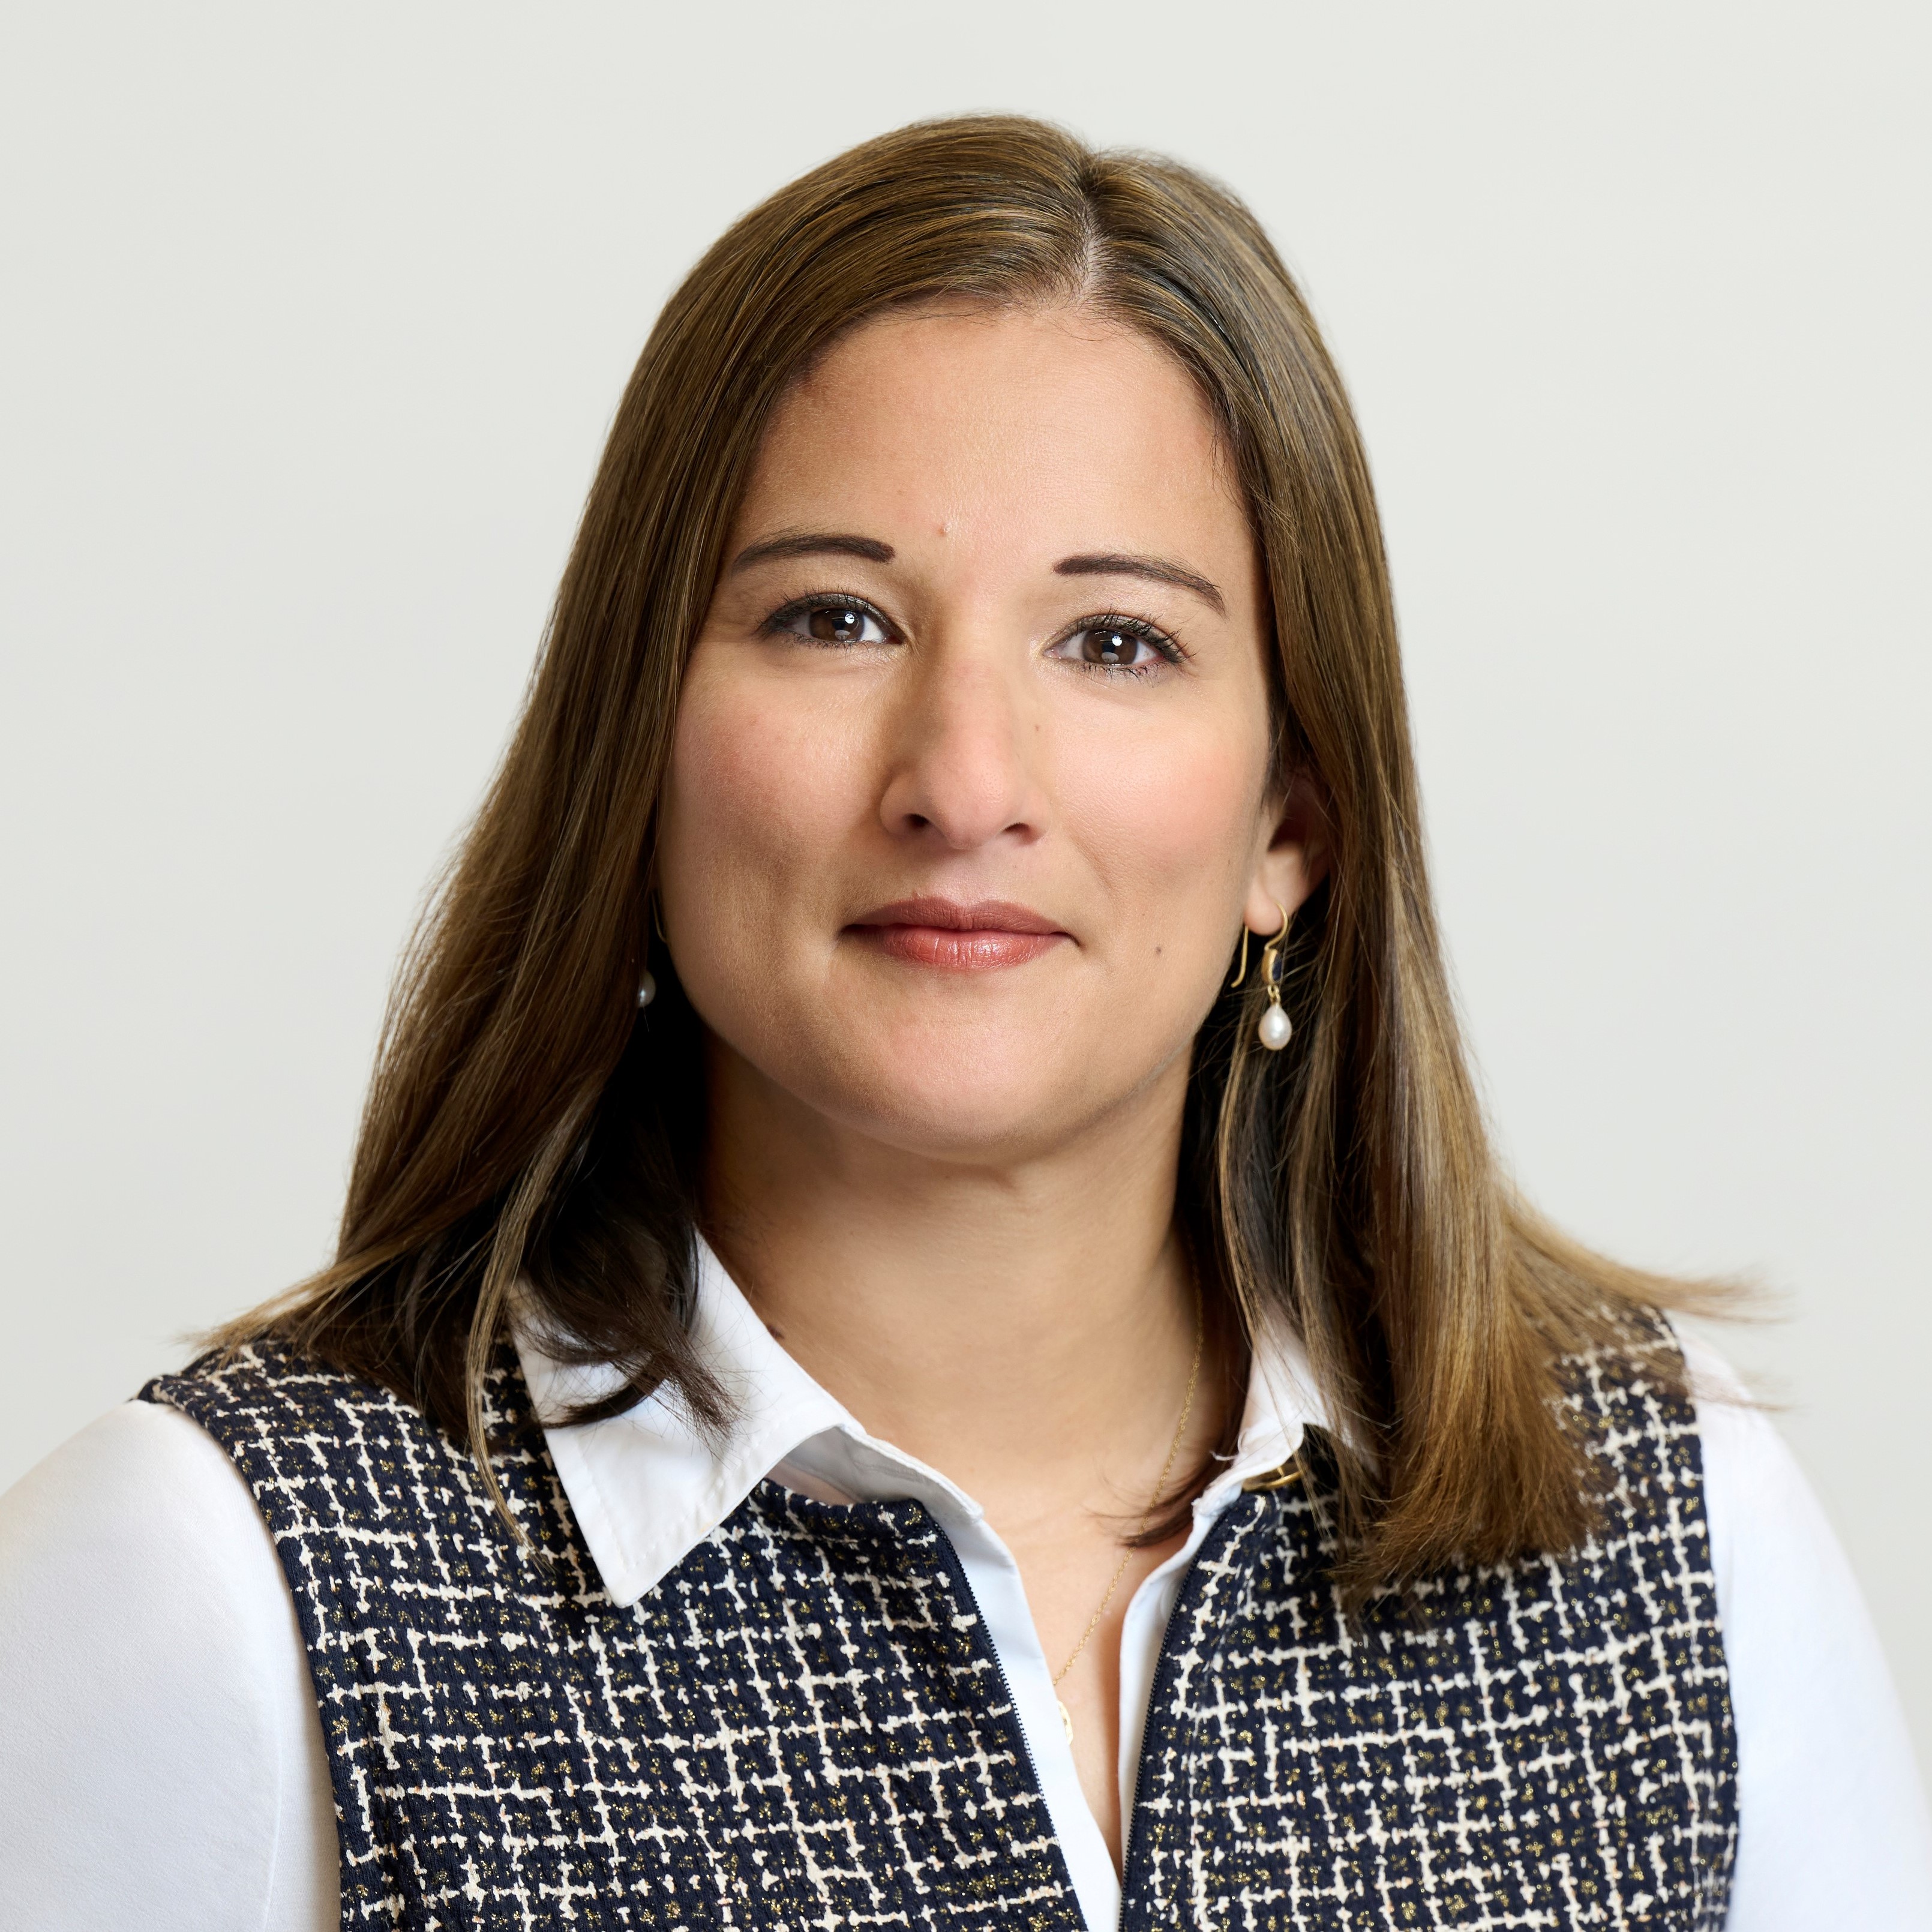 Chantal Waight, Managing Director of Group Risk at Athora